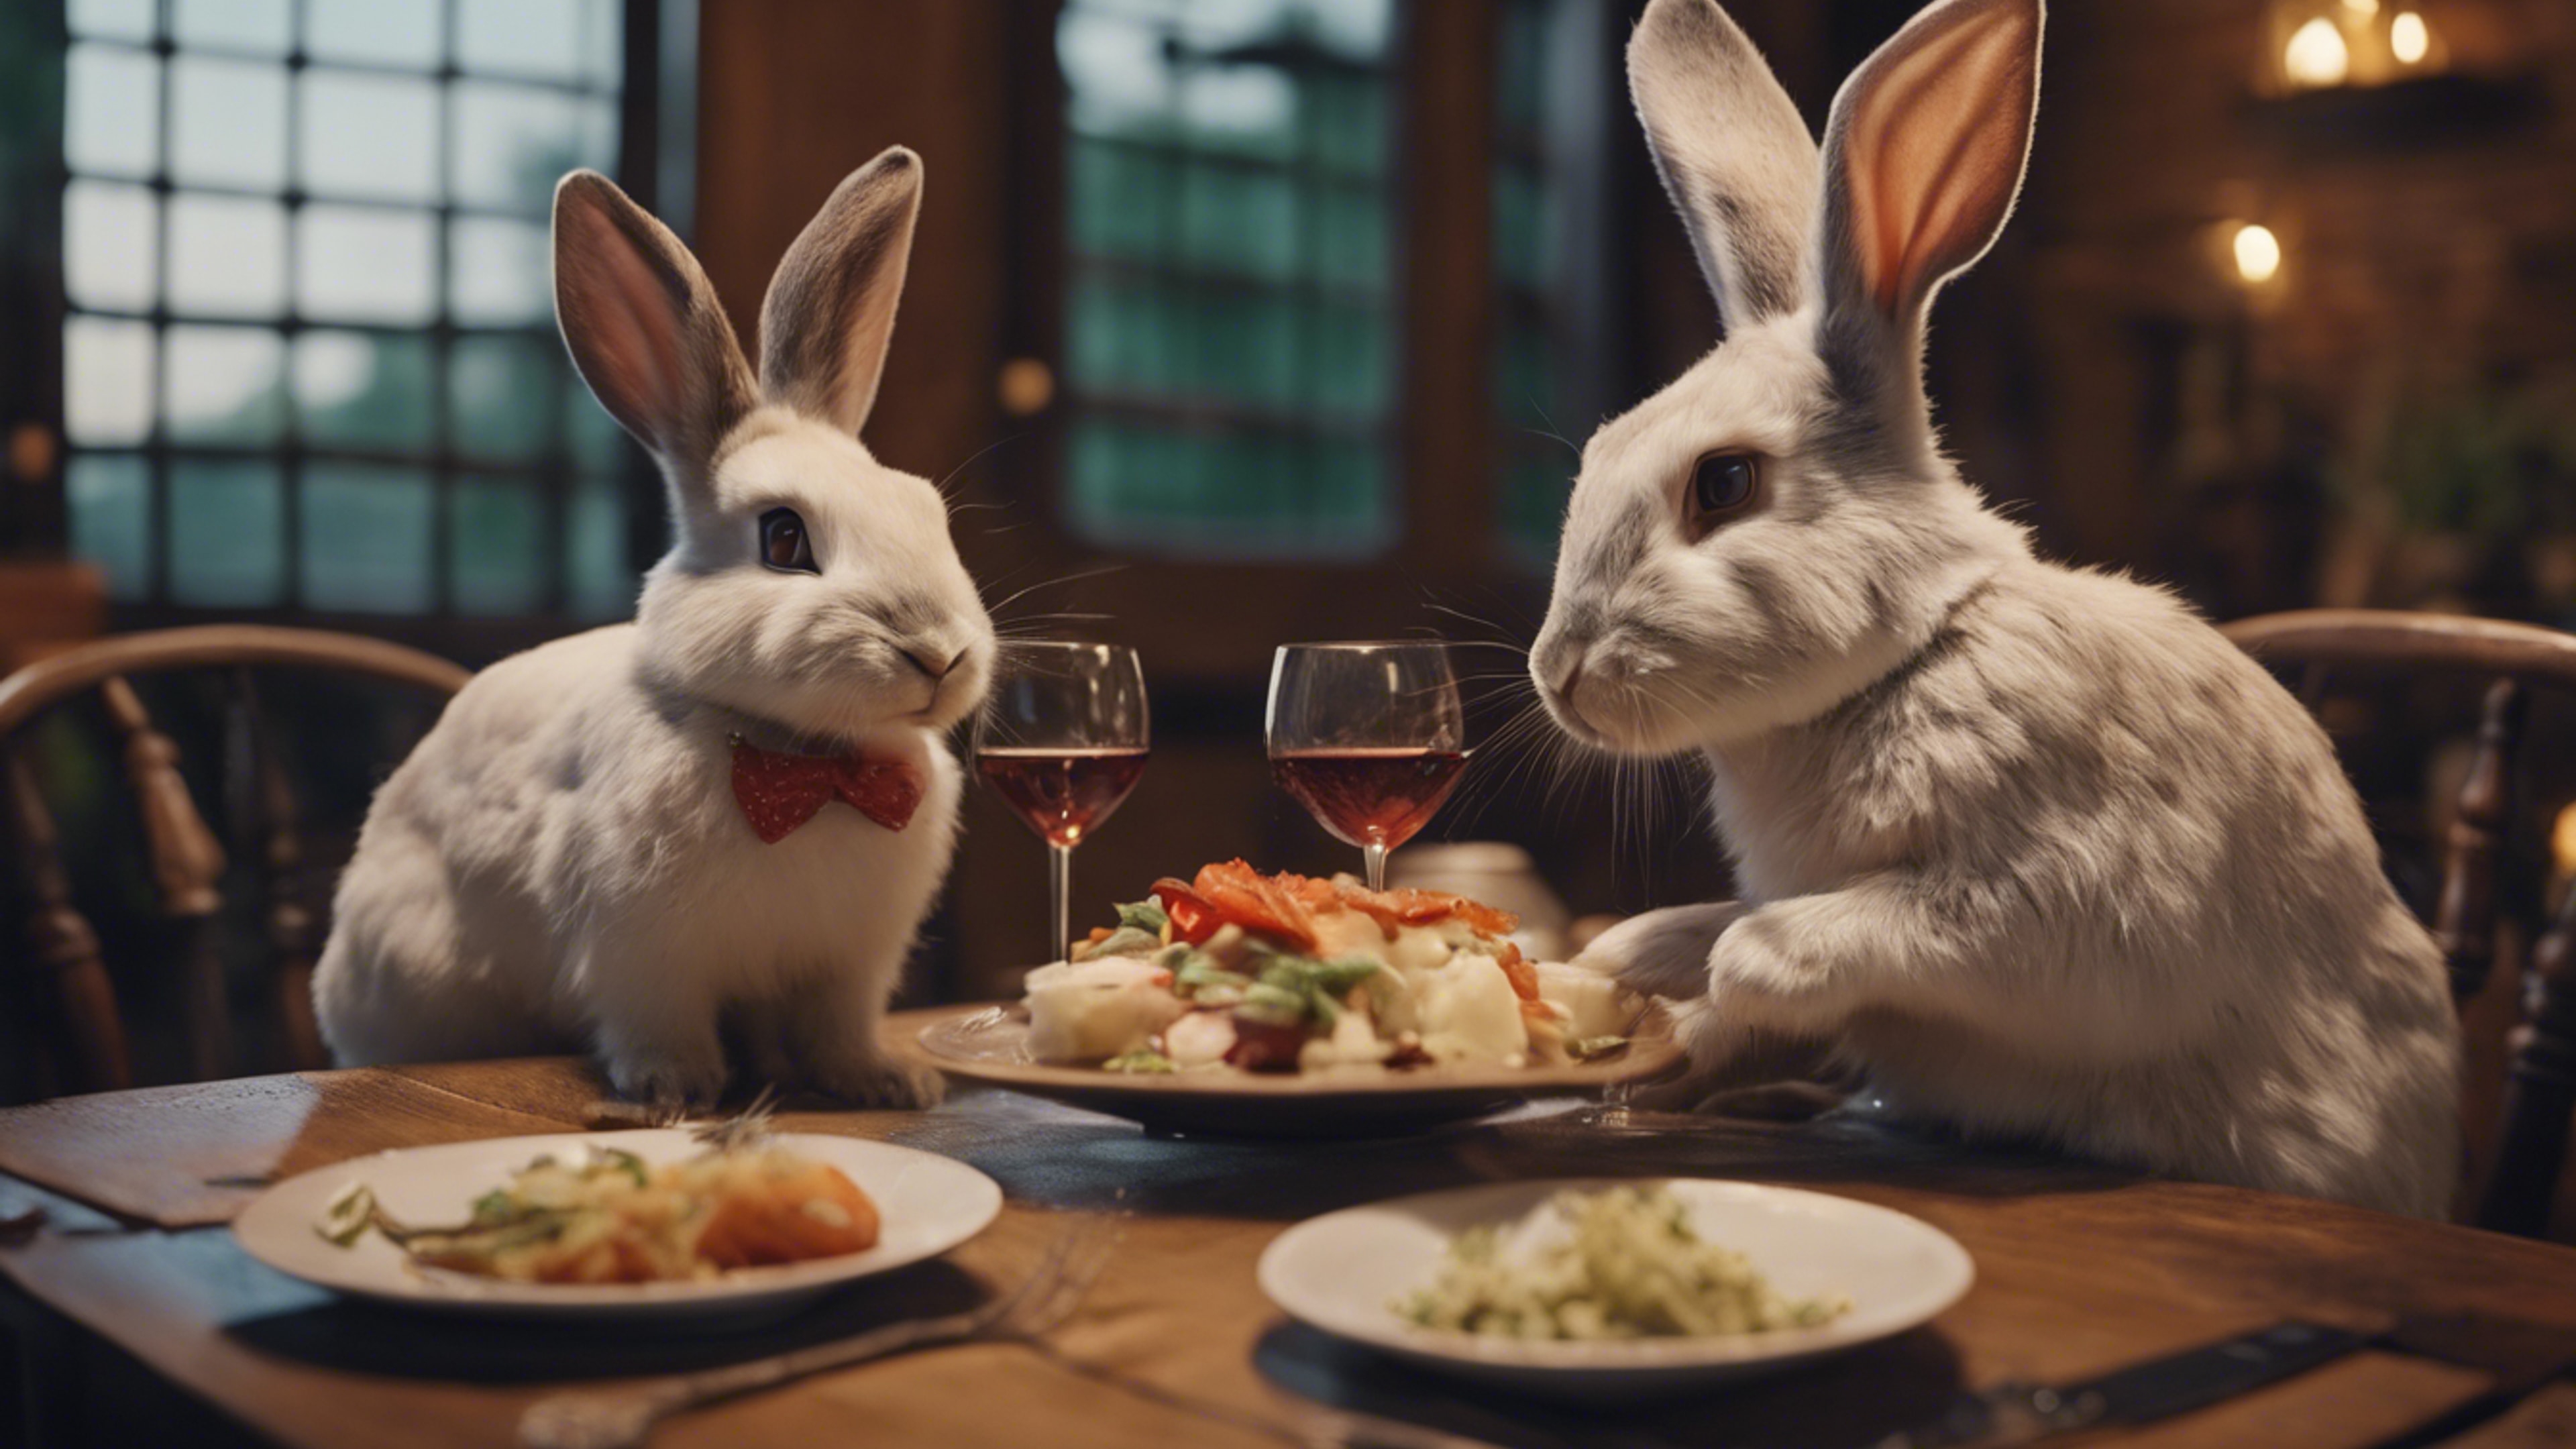 A rabbit couple enjoying a romantic dinner in a quaint, rustic setting. טפט[f4a7594170784844a7a3]